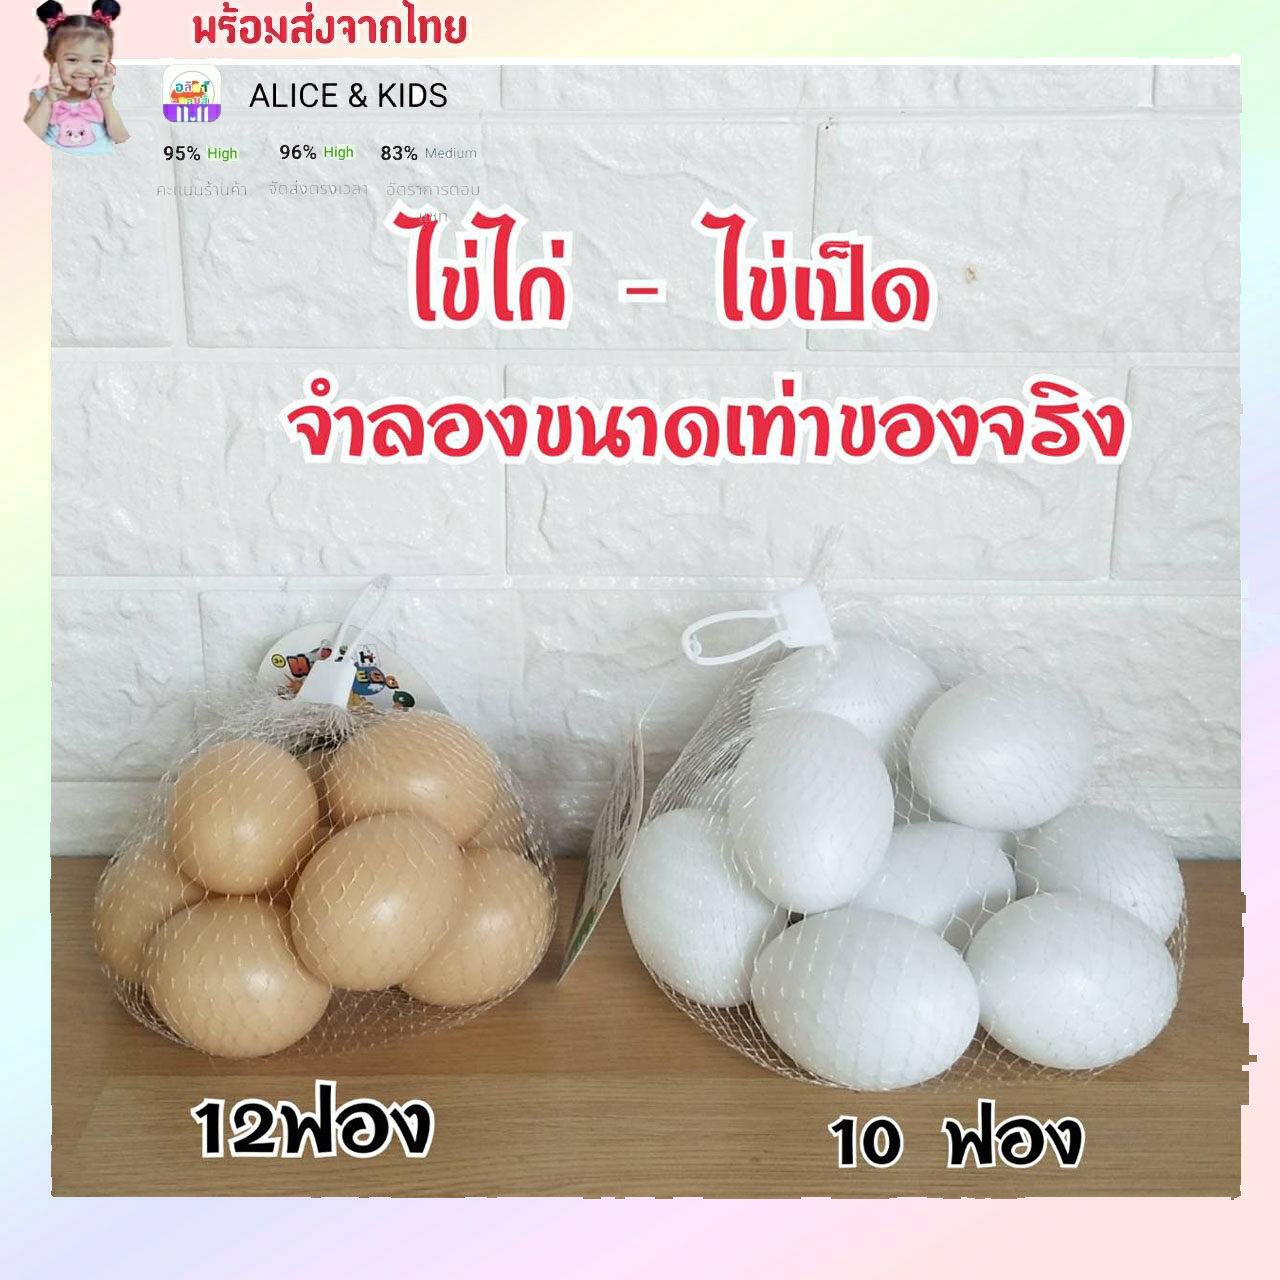 ???? Alice&Kids ???? ไข่ไก่-ไข่เป็ด จำลองขนาดเท่าของจริง (สีของไข่อาจจะเปลี่ยนแปลงไปในแต่ละLot)  | Lazada.Co.Th